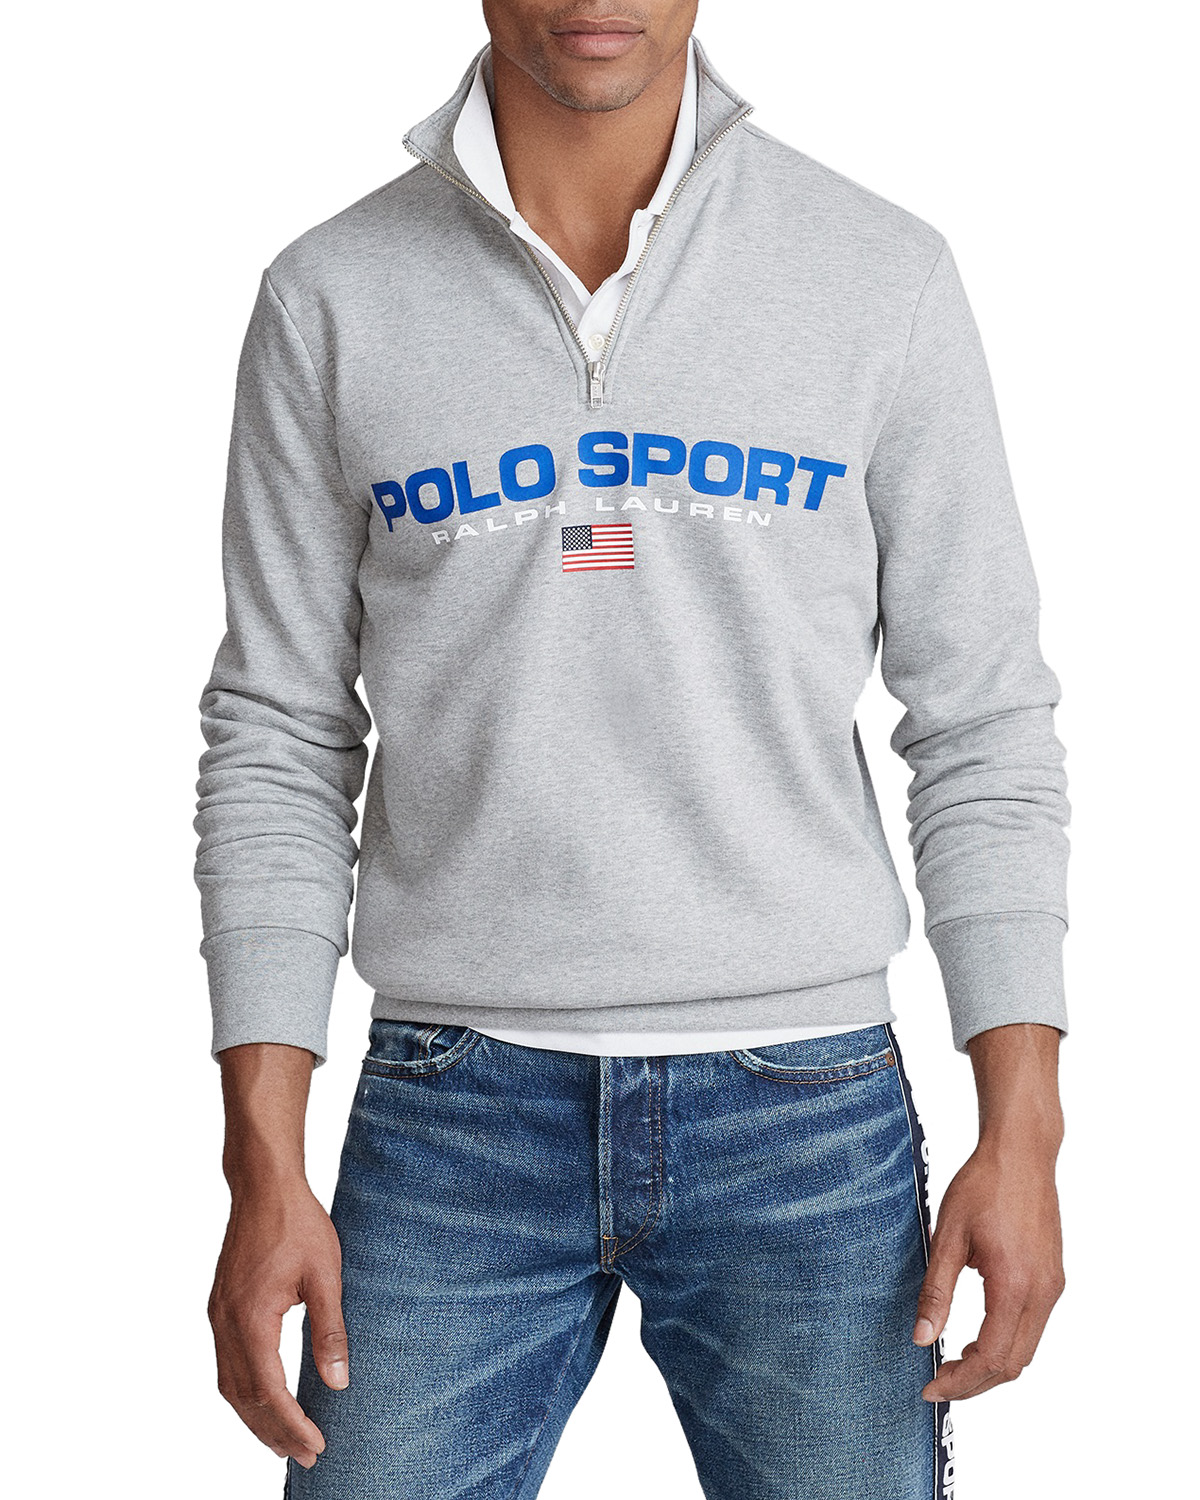  Polo  Ralph Lauren Polo  Sport Fleece Sweatshirt  Andover 